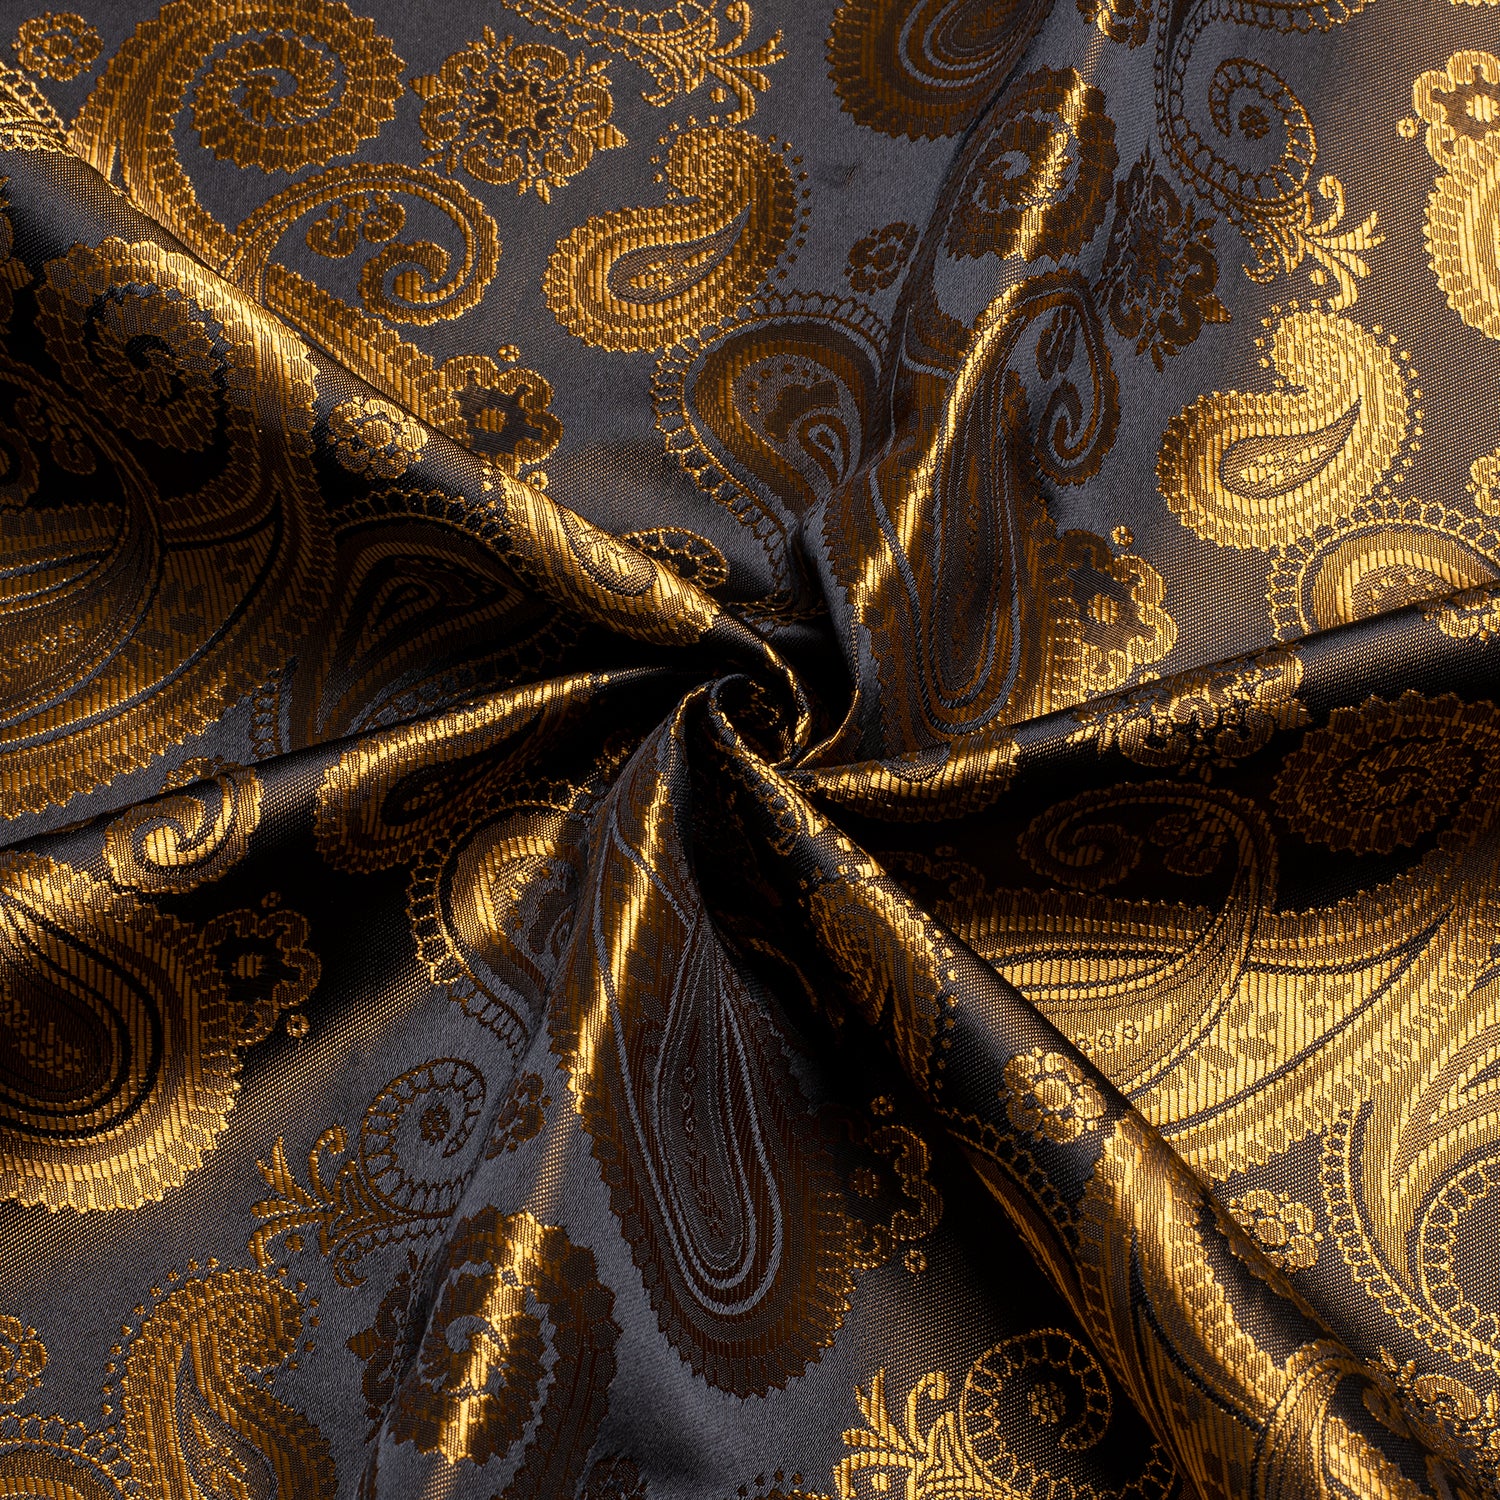 Luxury Golden Black Paisley Silk Men's Long Sleeve Shirt Casual